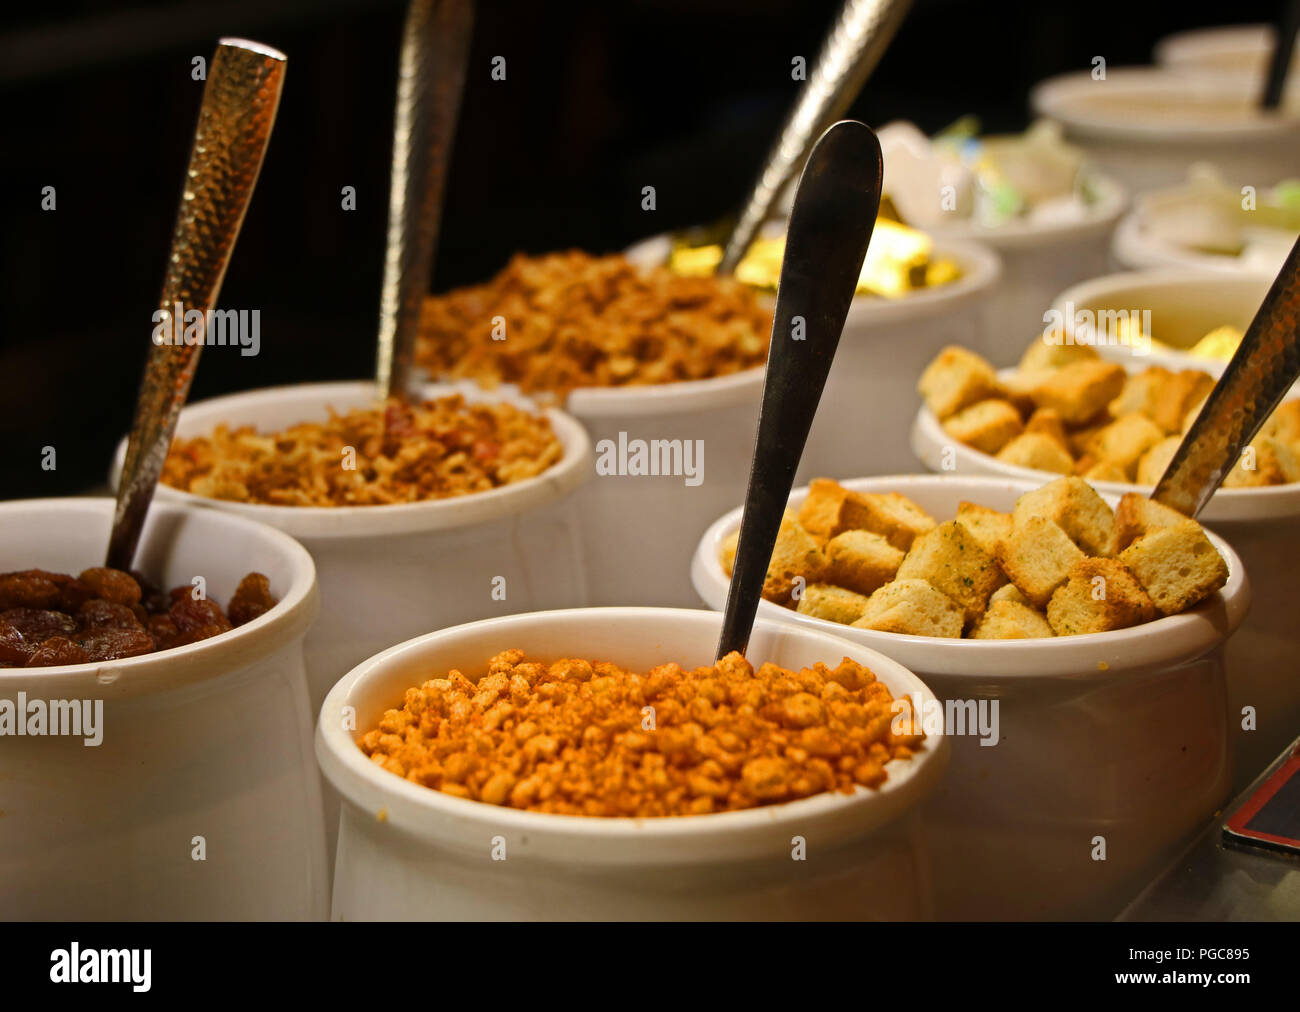 Salad accompaniments and spoons. Stock Photo